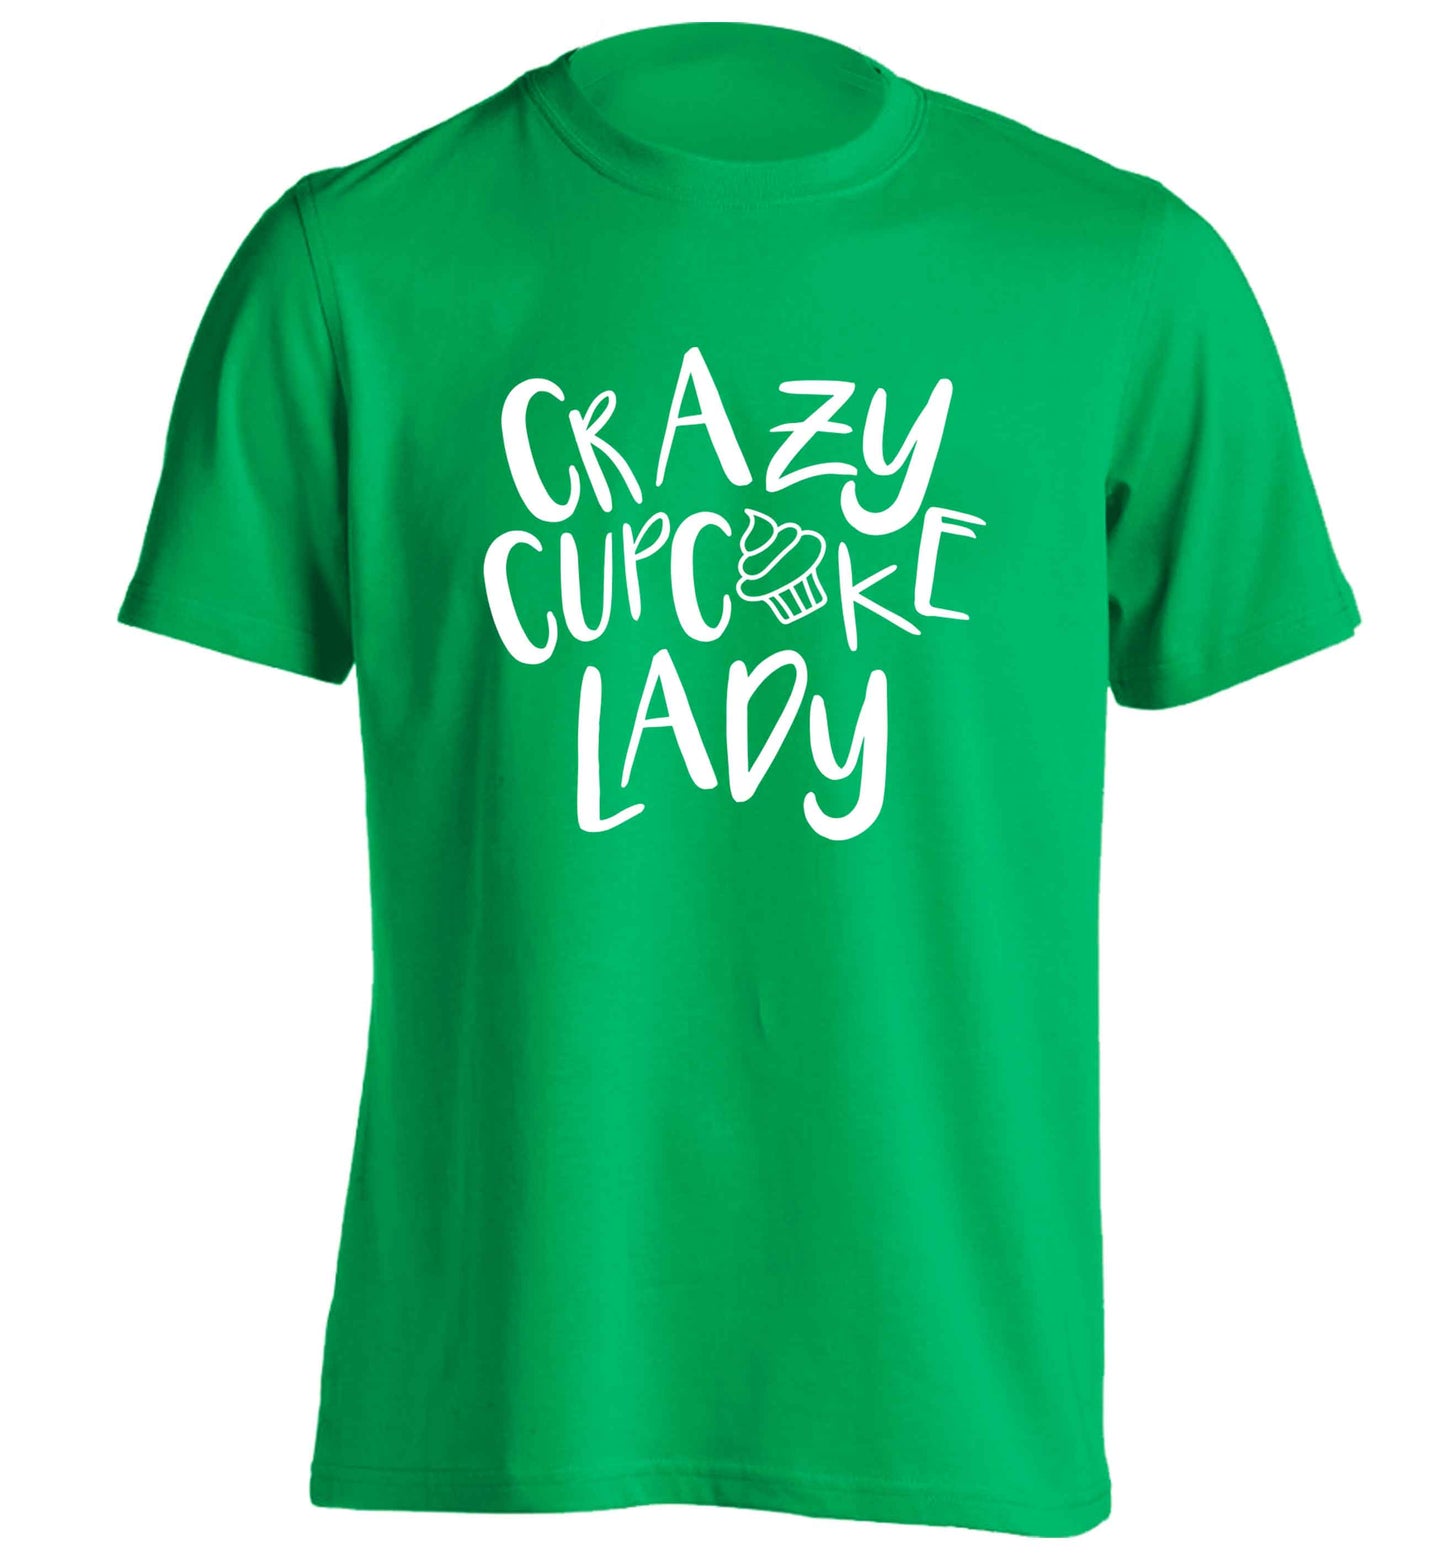 Crazy cupcake lady adults unisex green Tshirt 2XL